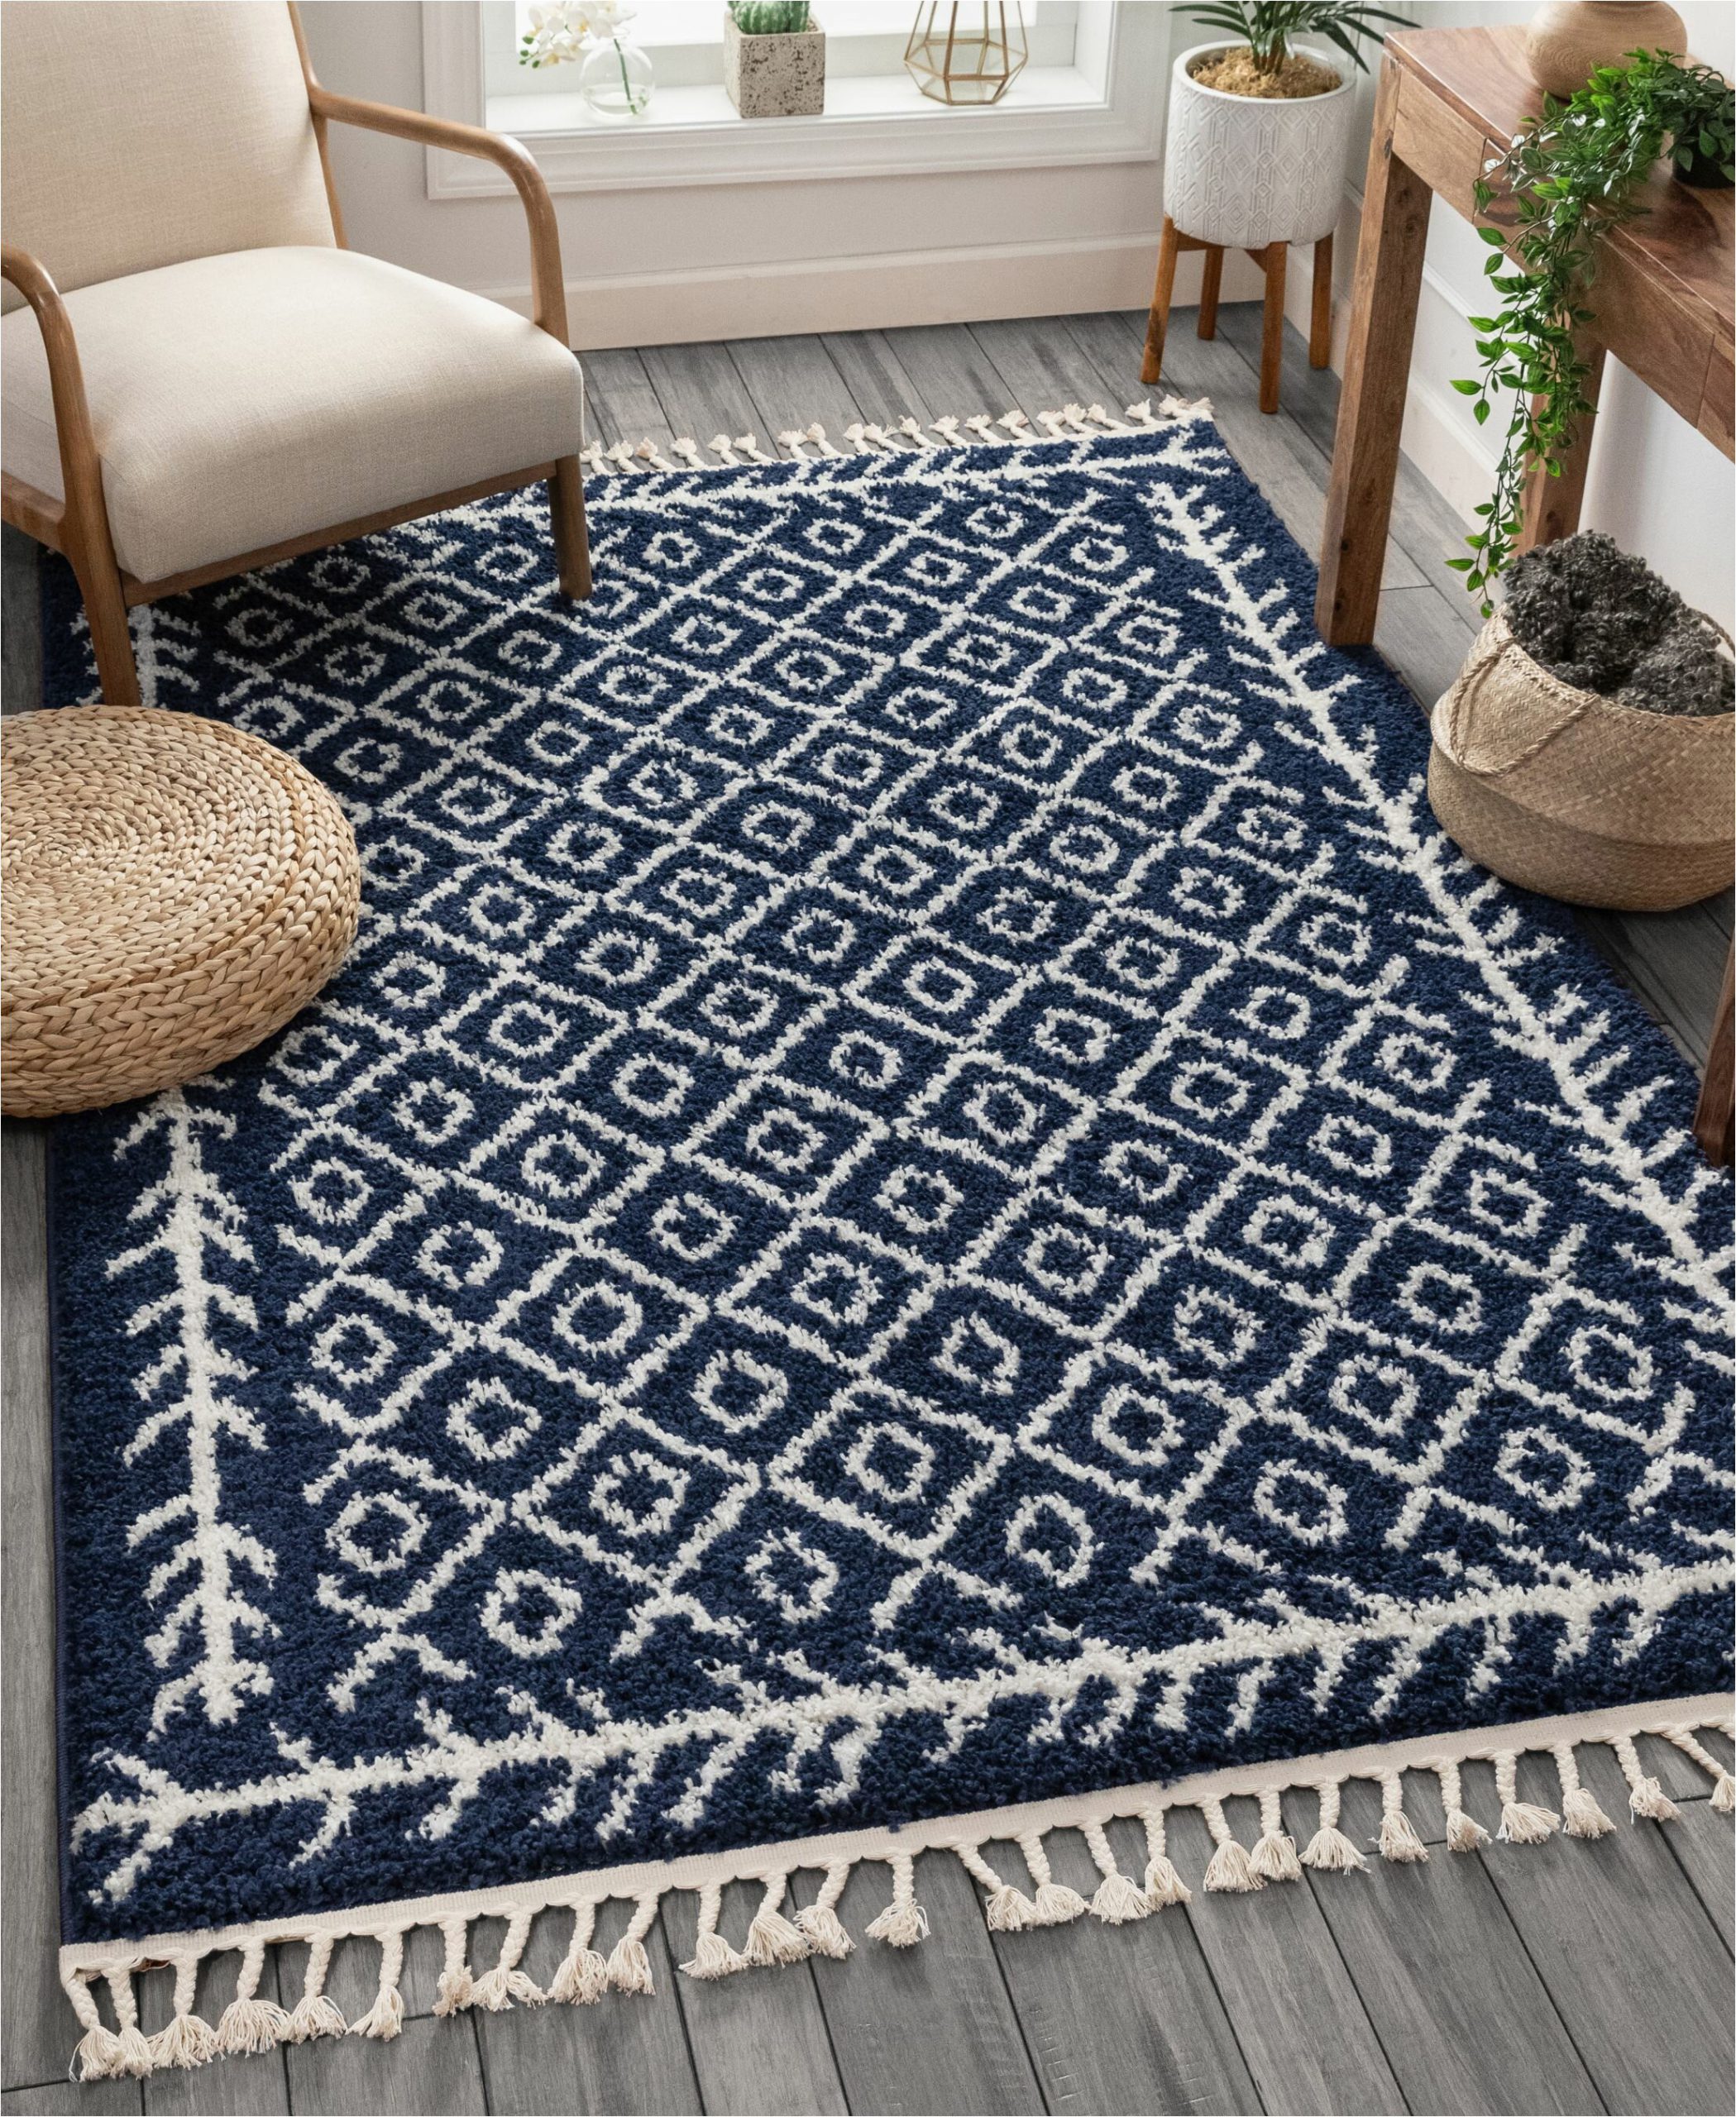 cabana geometric bluewhite area rug